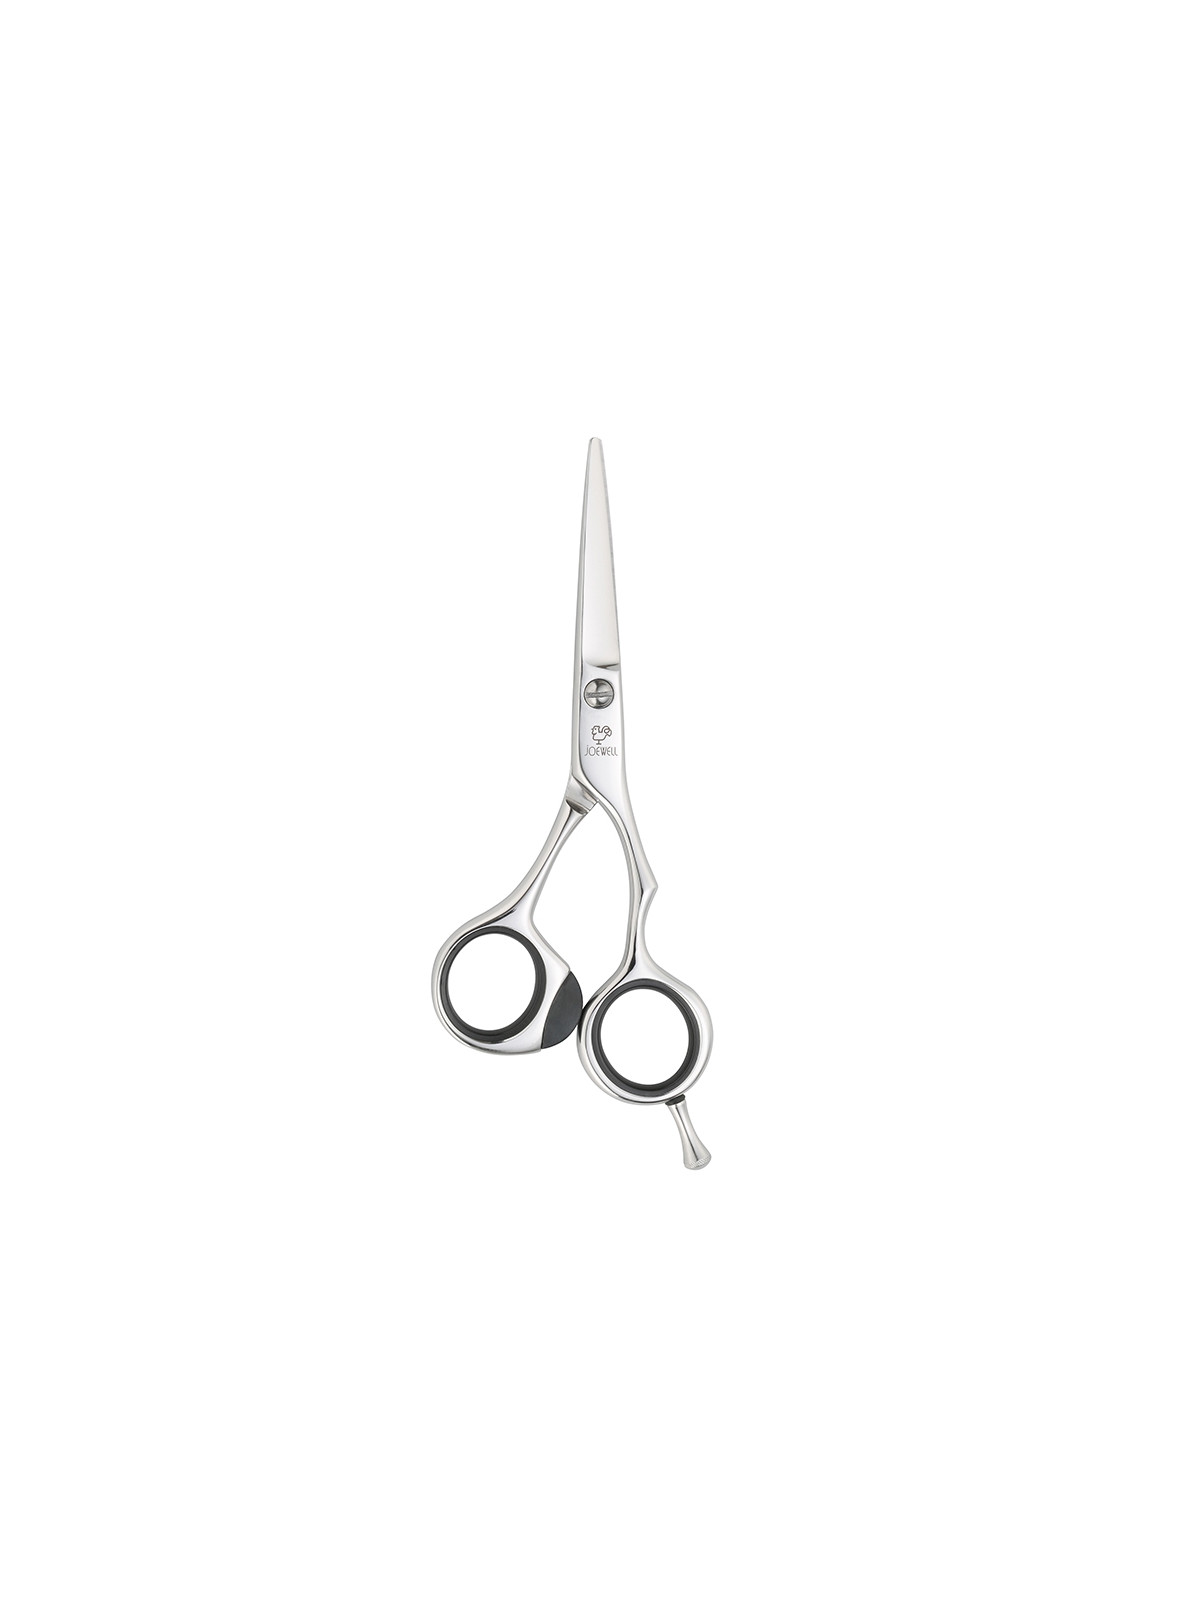 Joewell X cutting scissors